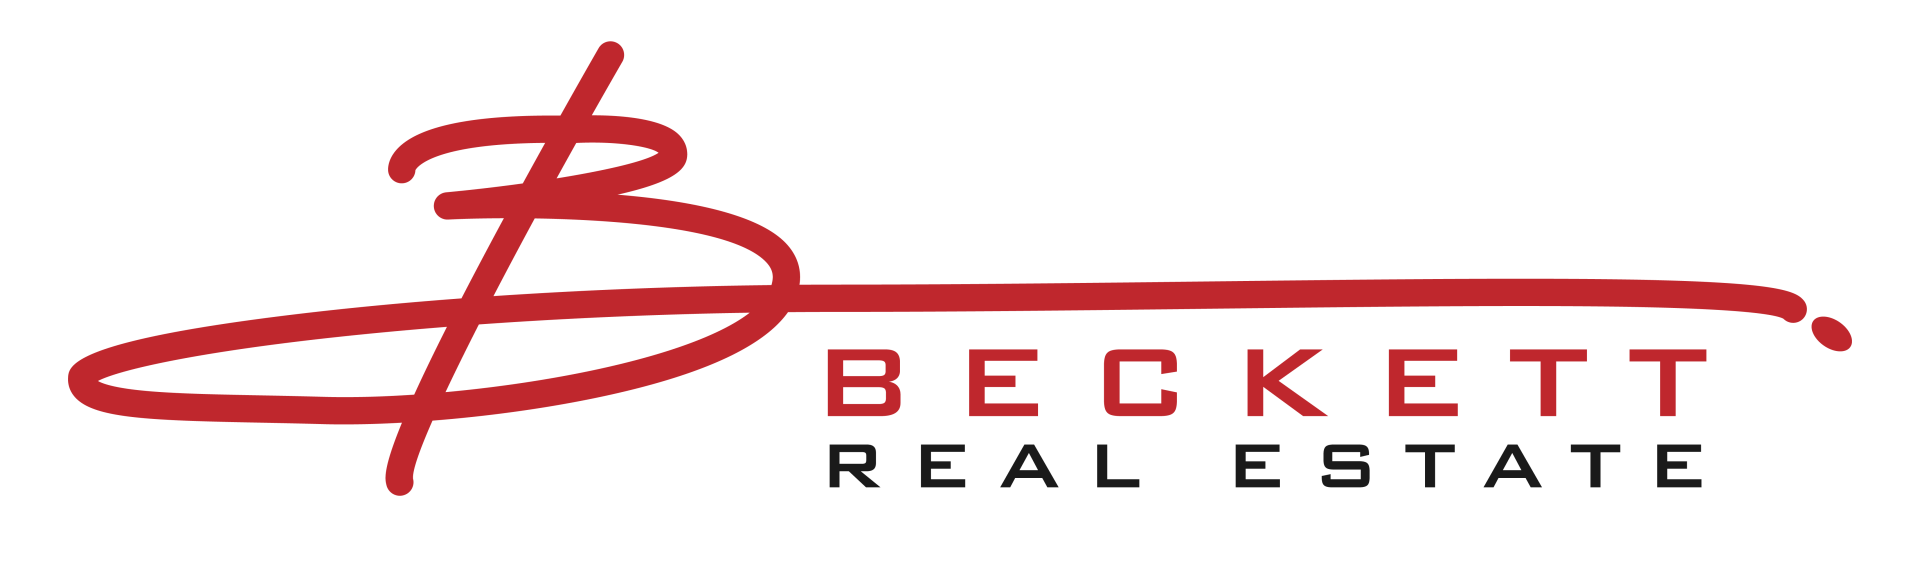 Best Realtor Peachtree City, GA - Beckett Real Estate